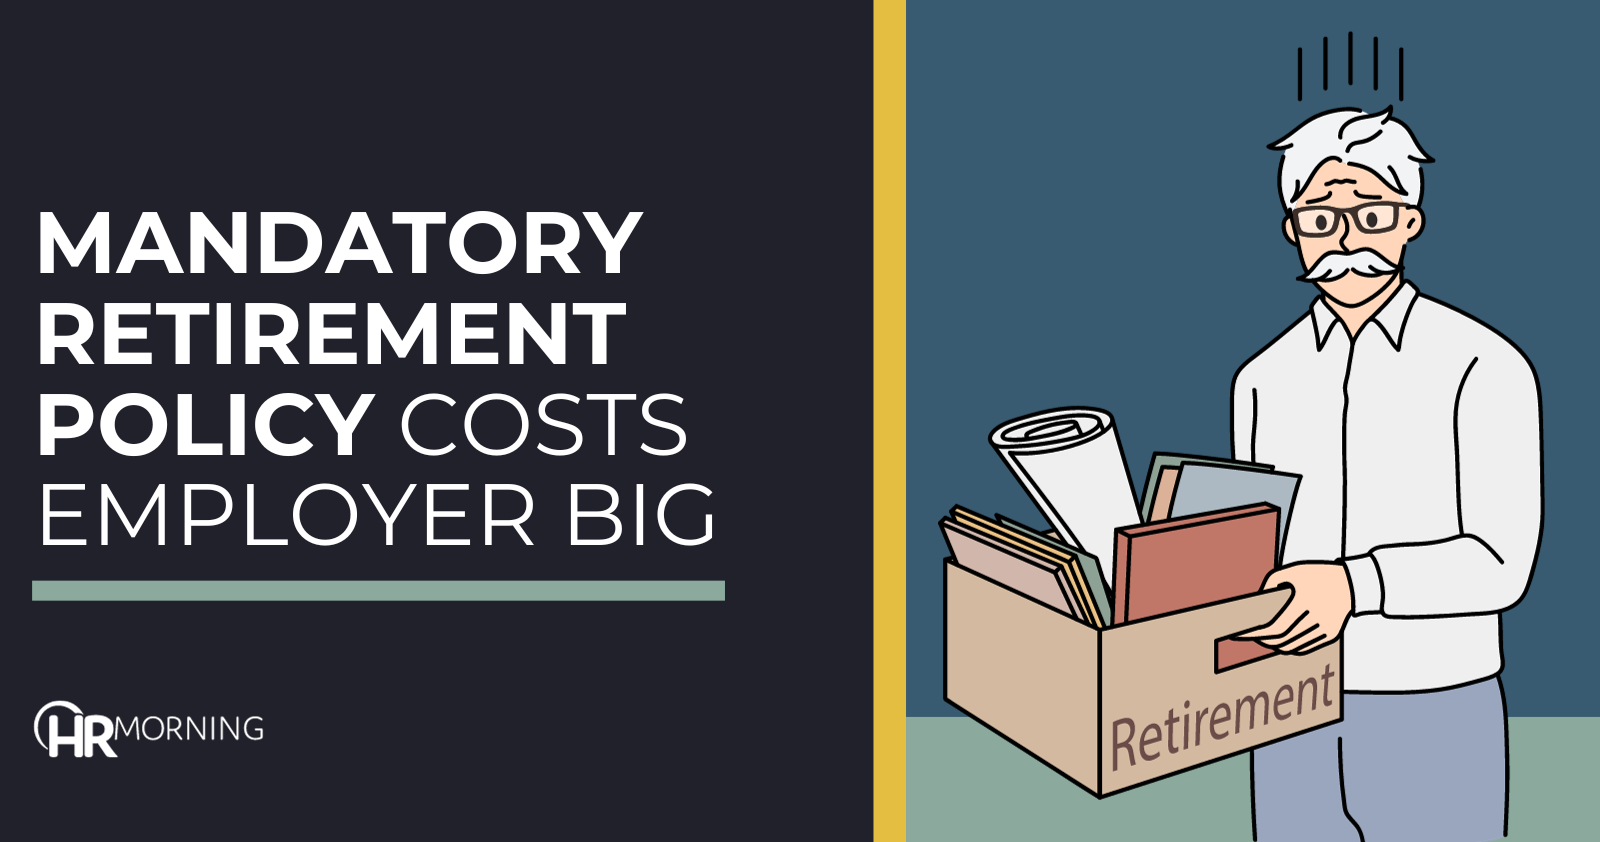 Mandatory retirement policy costs employer big